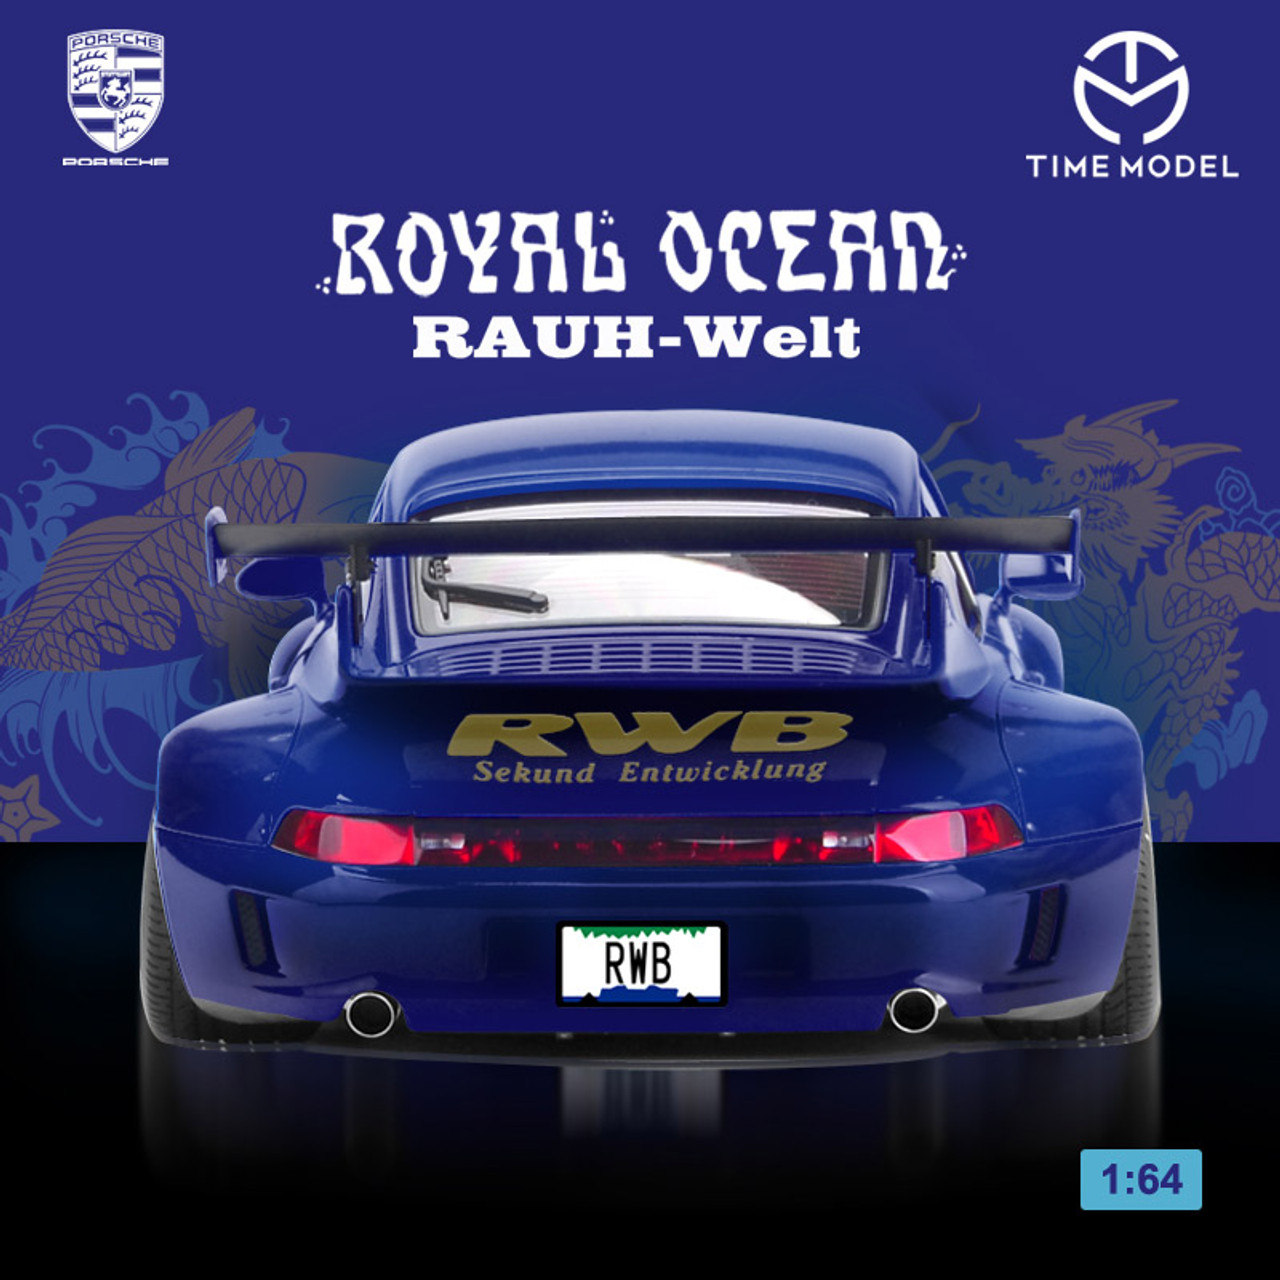 1/64 Porsche RWB 930 Rauh-Welt Royal Ocean Diecast Car Model Limited